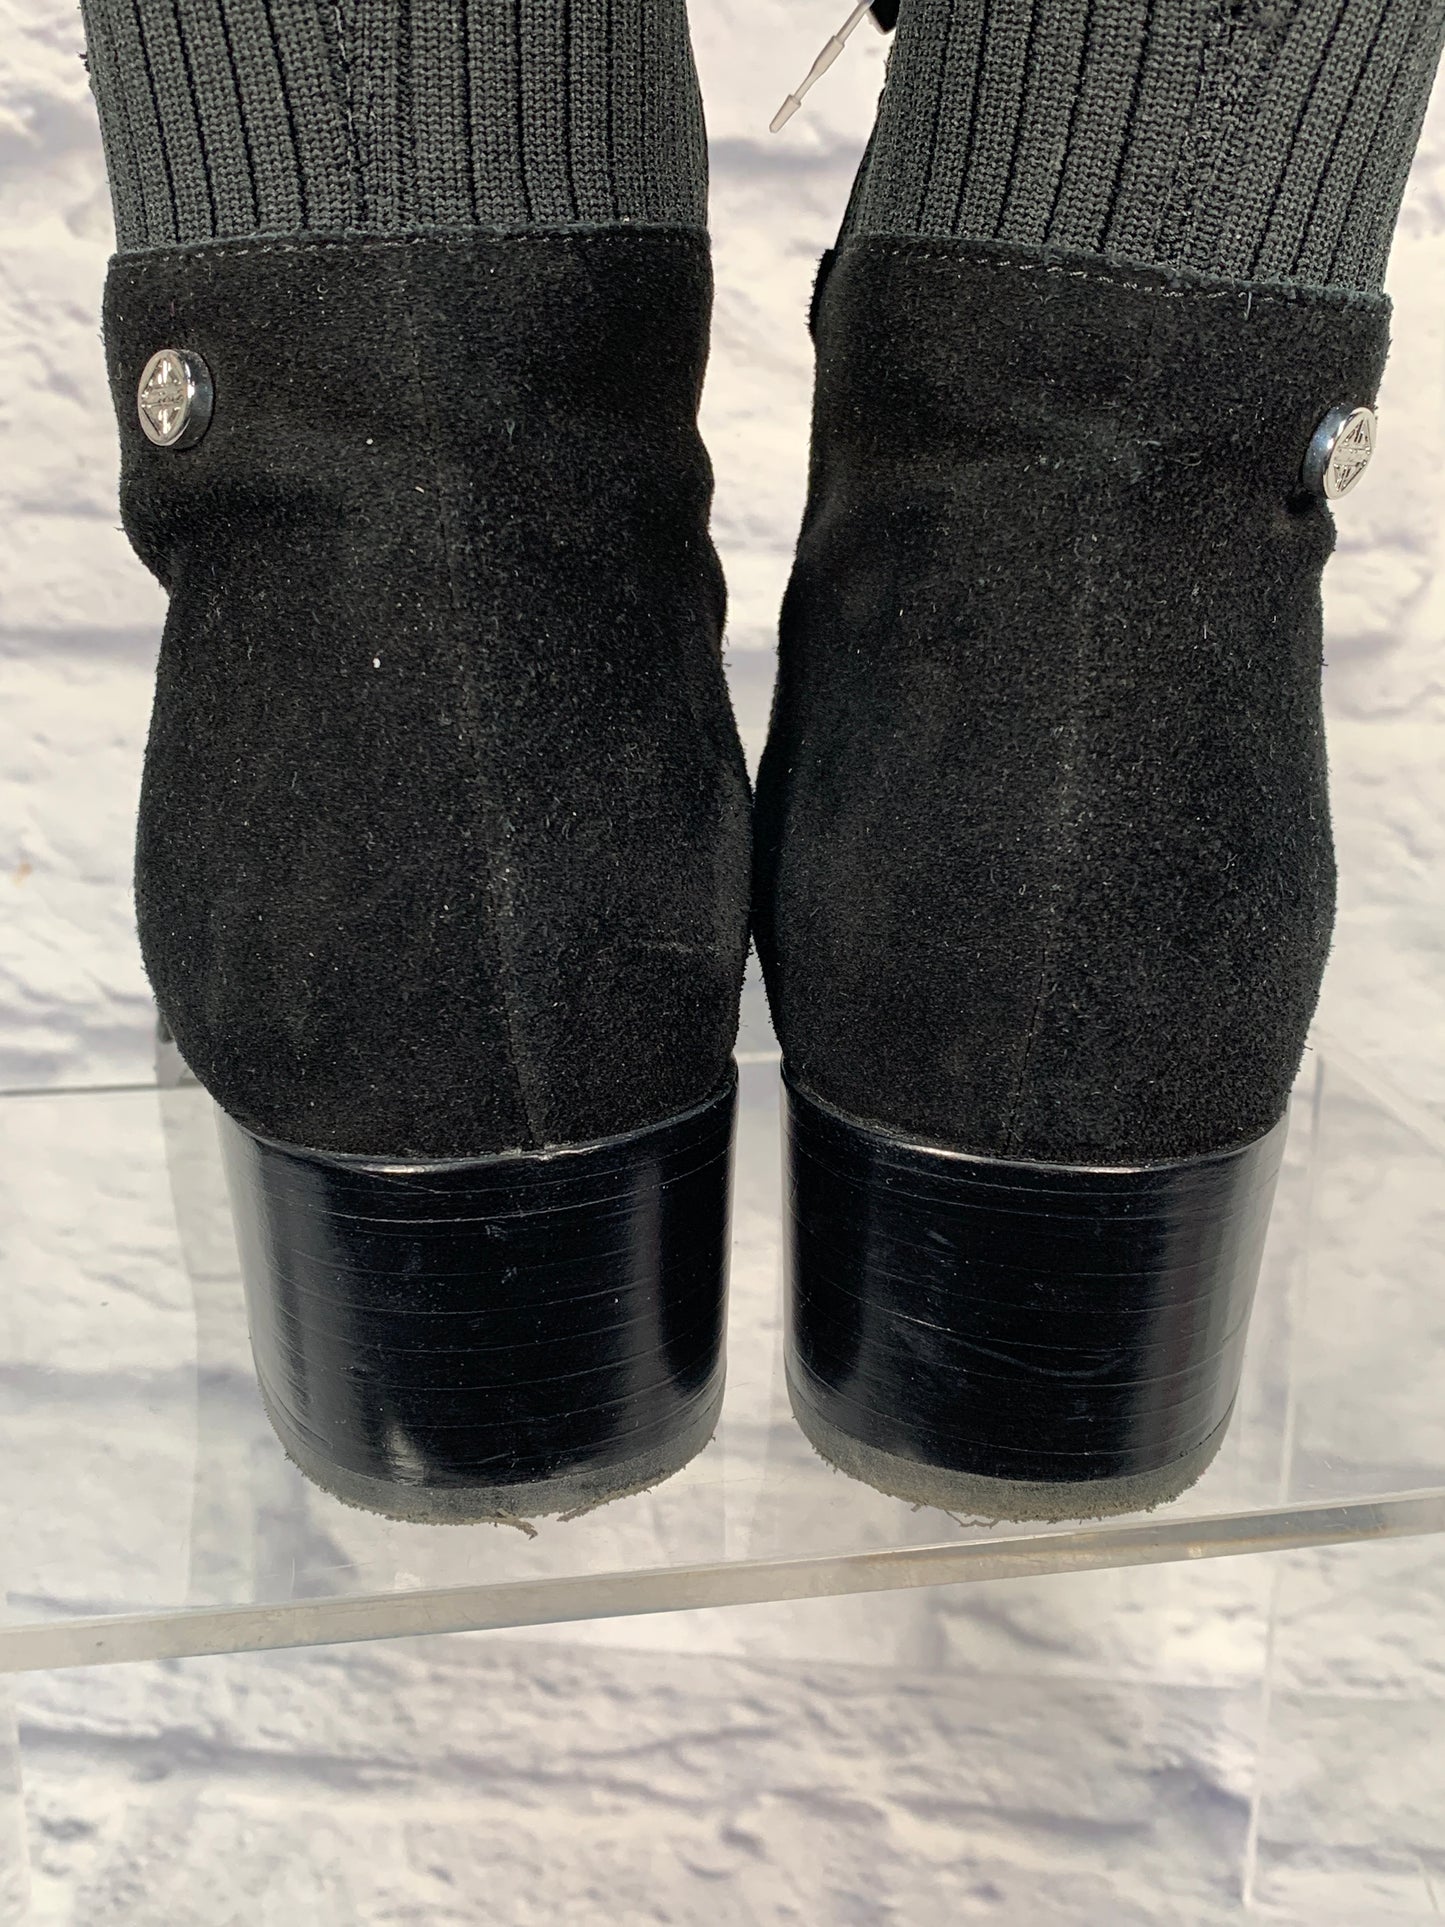 Boots Knee Flats By Antonio Melani  Size: 8.5